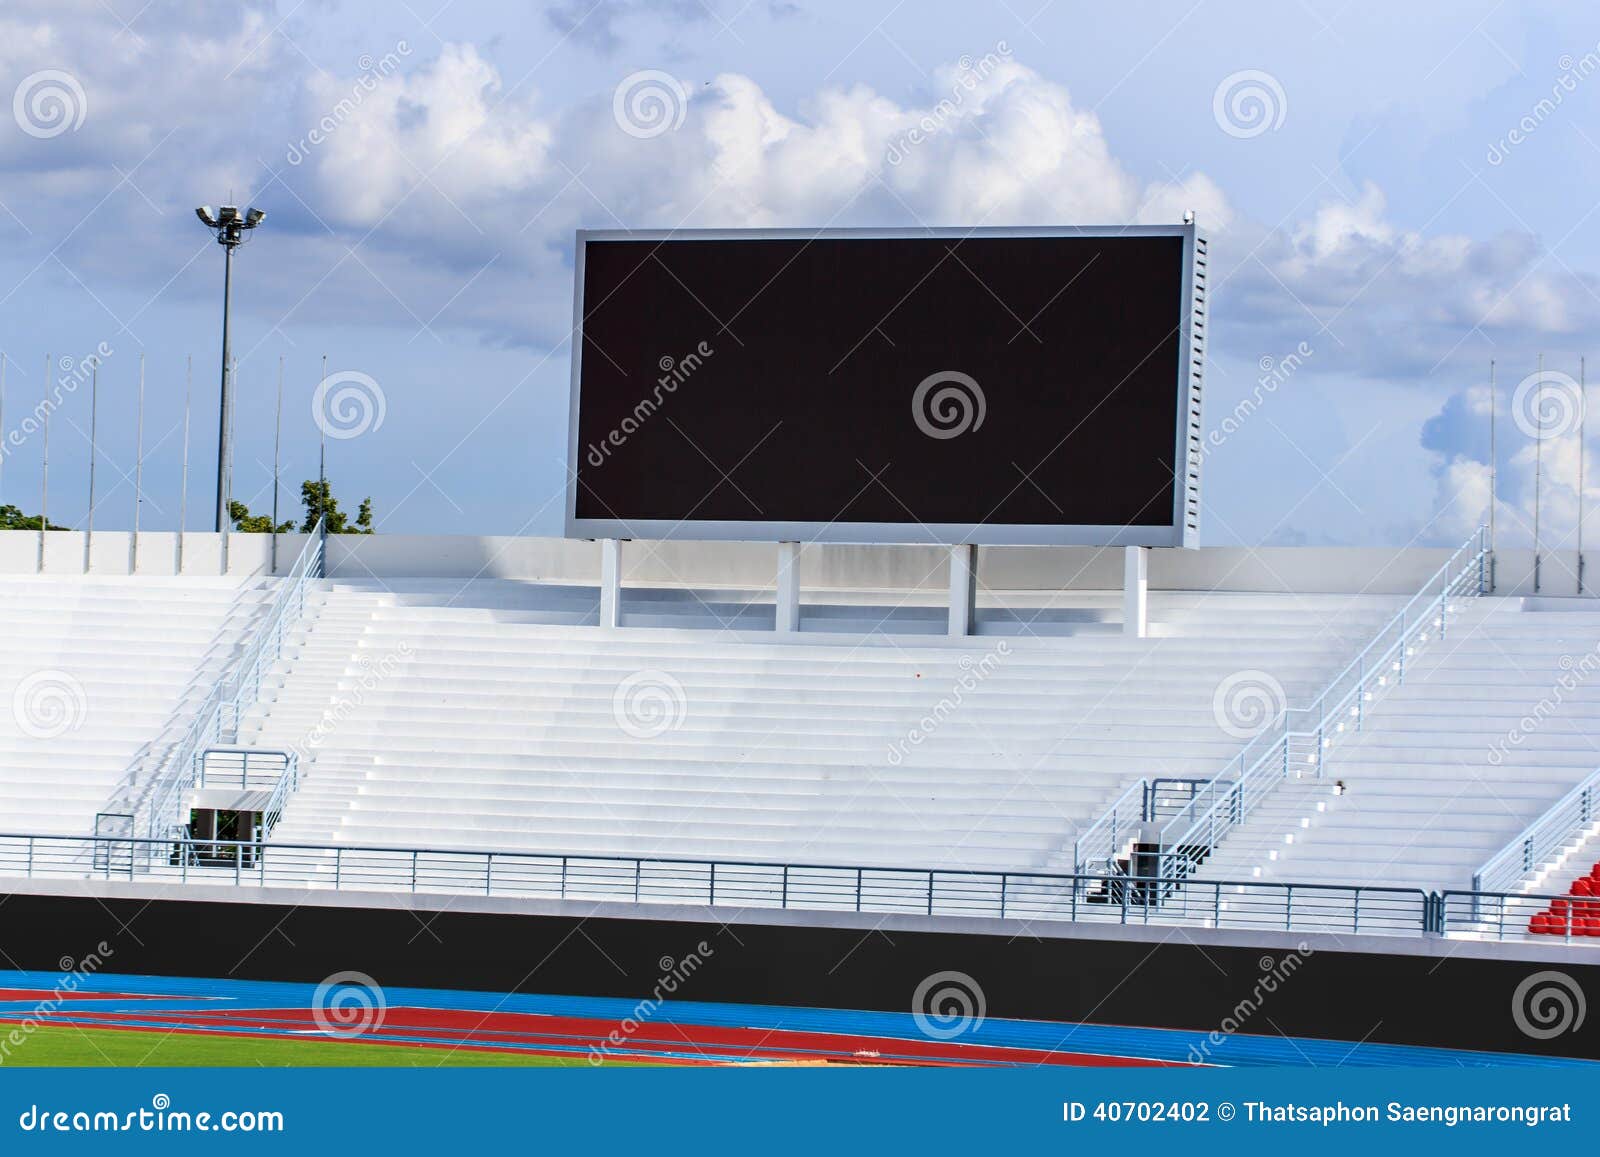 scoreboard screen in stadium